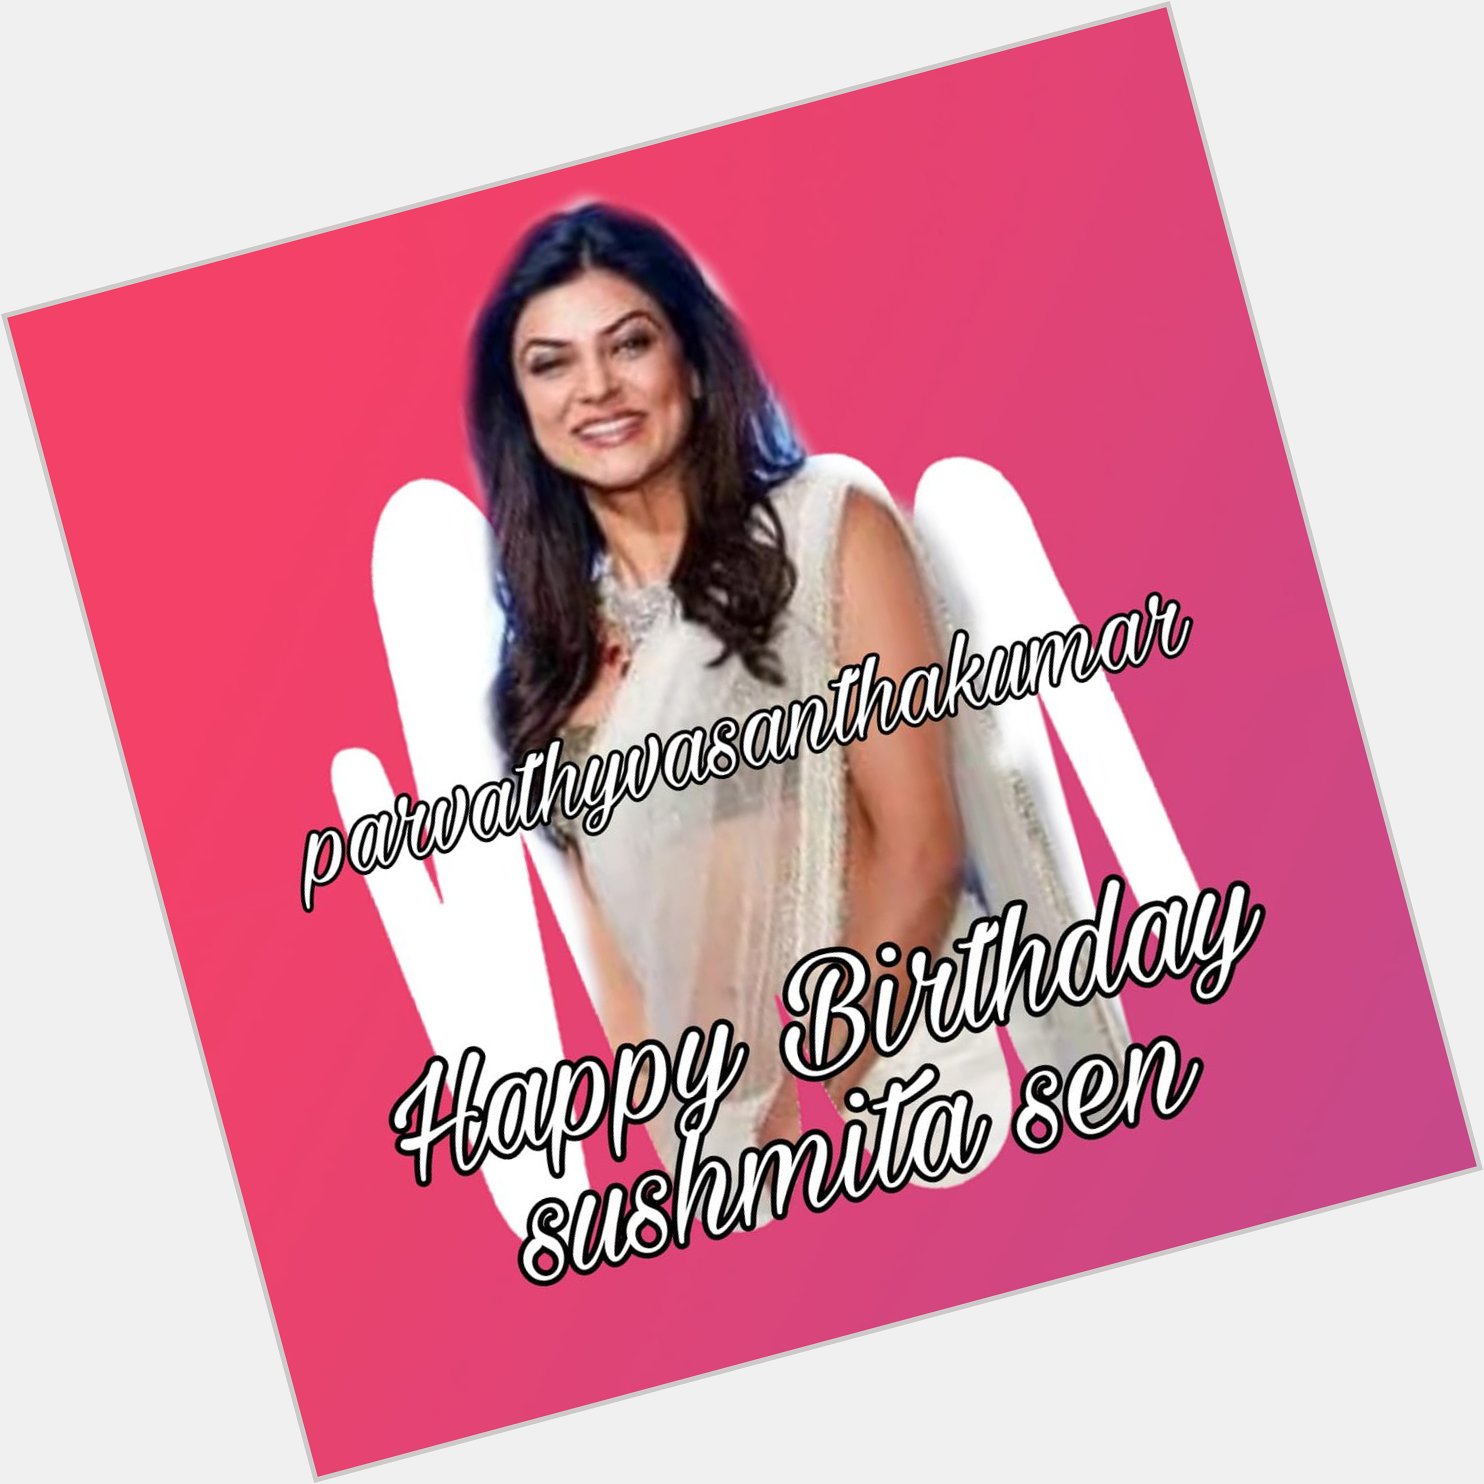 Happy birthday
Sushmita Sen   